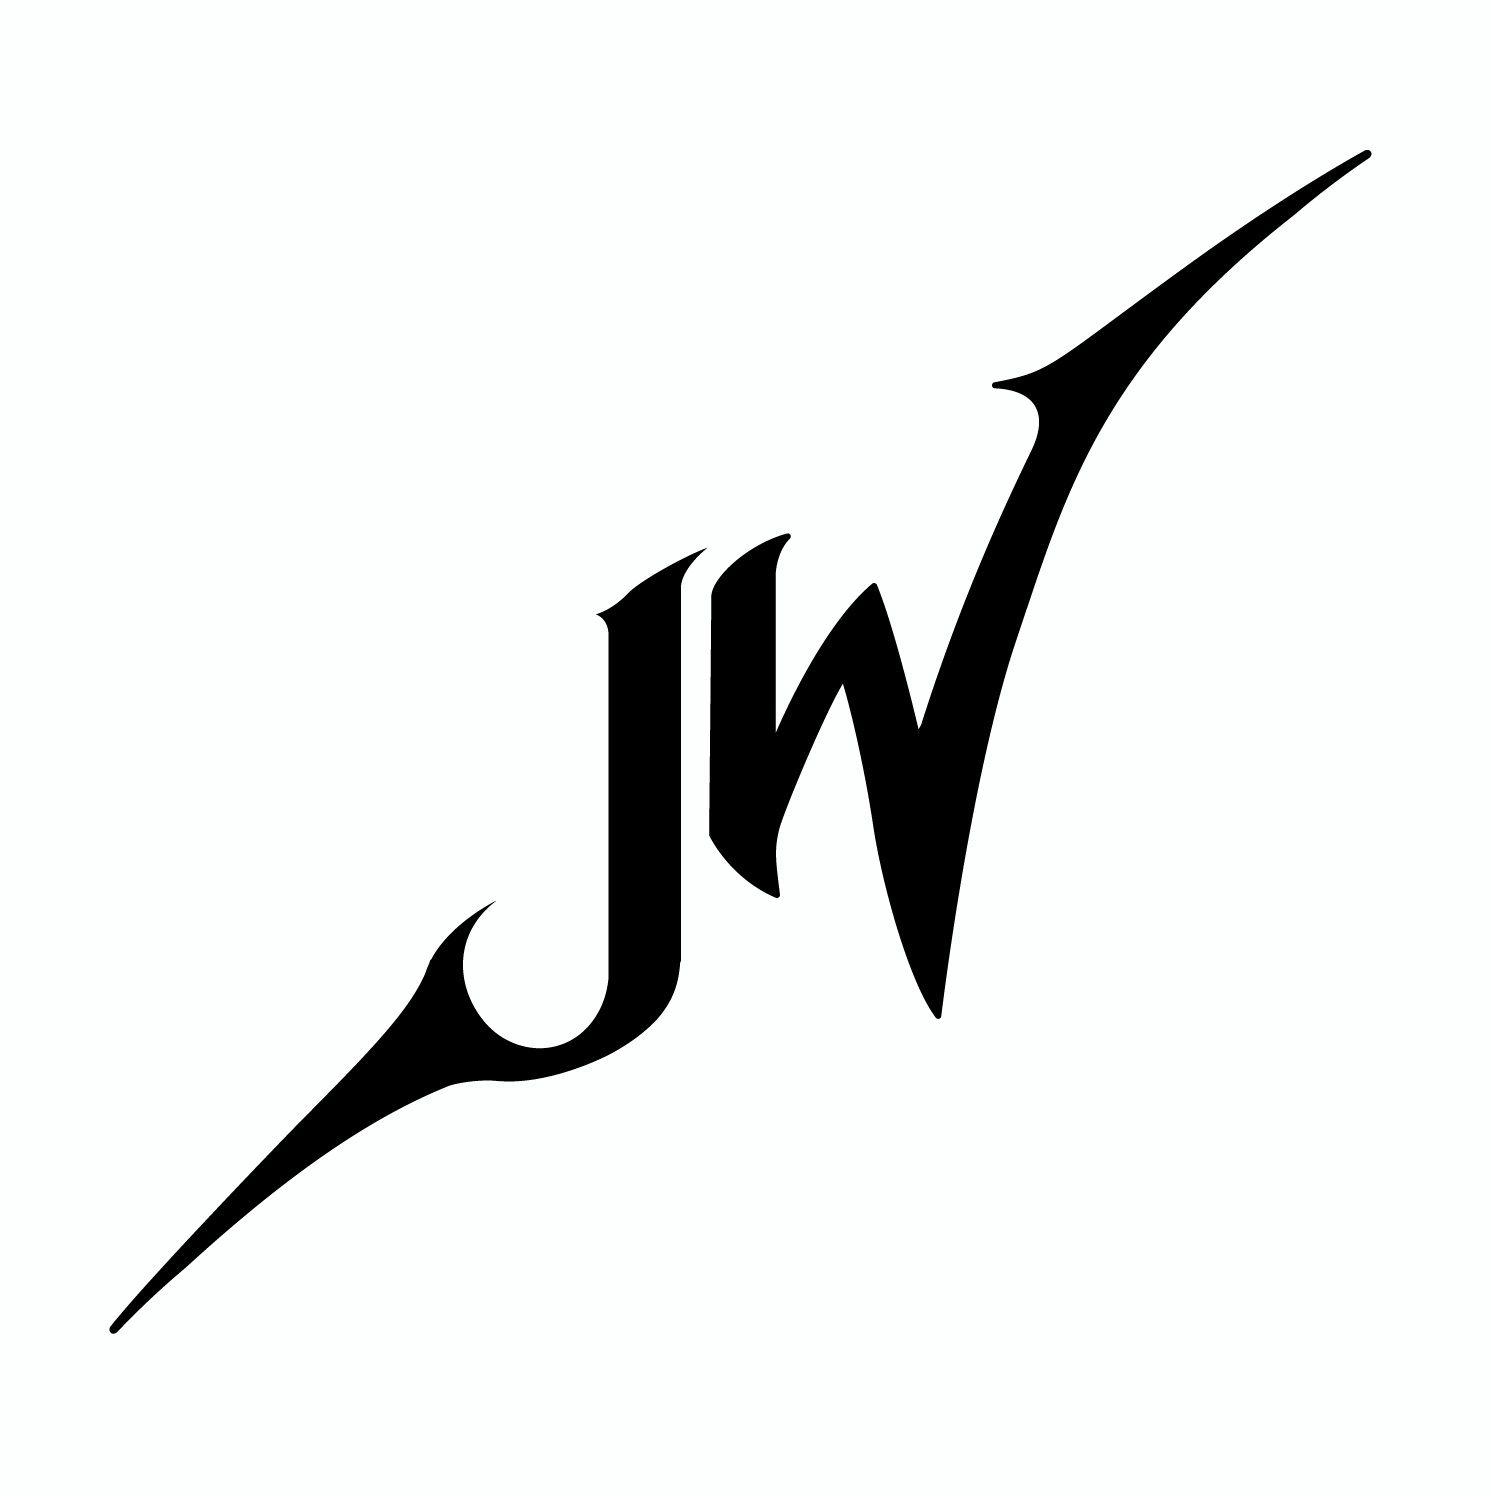 JW Logo - 48+] JW Logo Wallpaper on WallpaperSafari